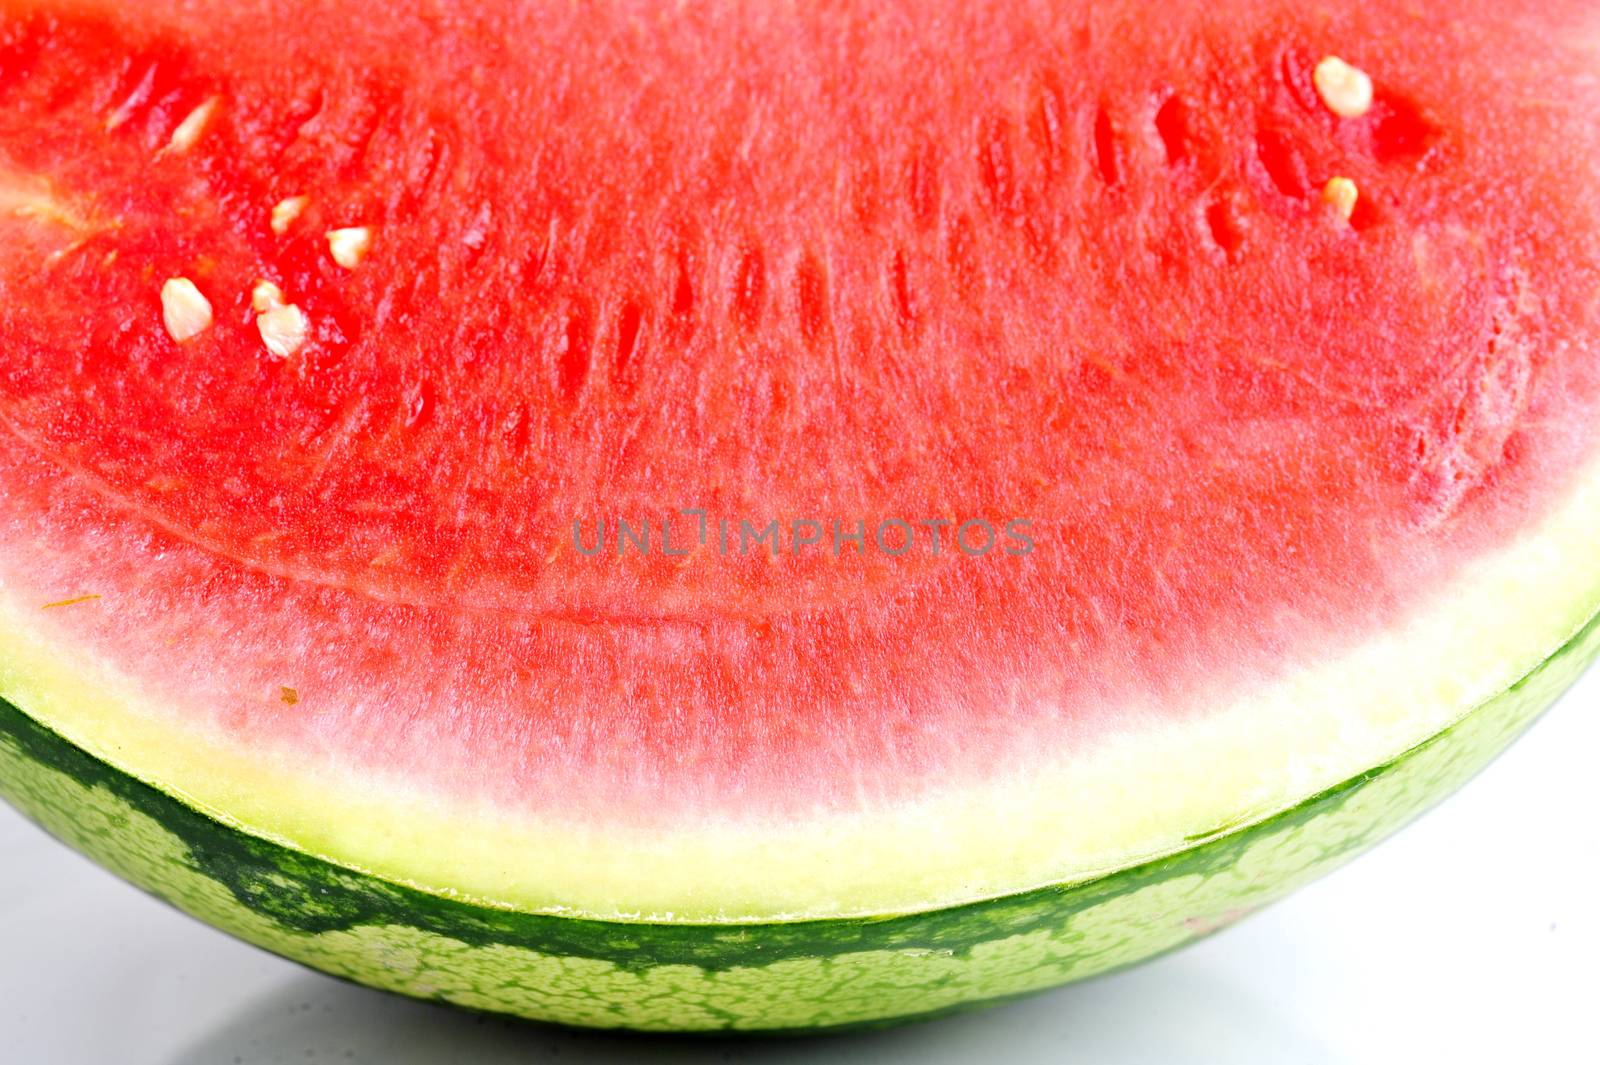 Watermelon Slice by seawaters